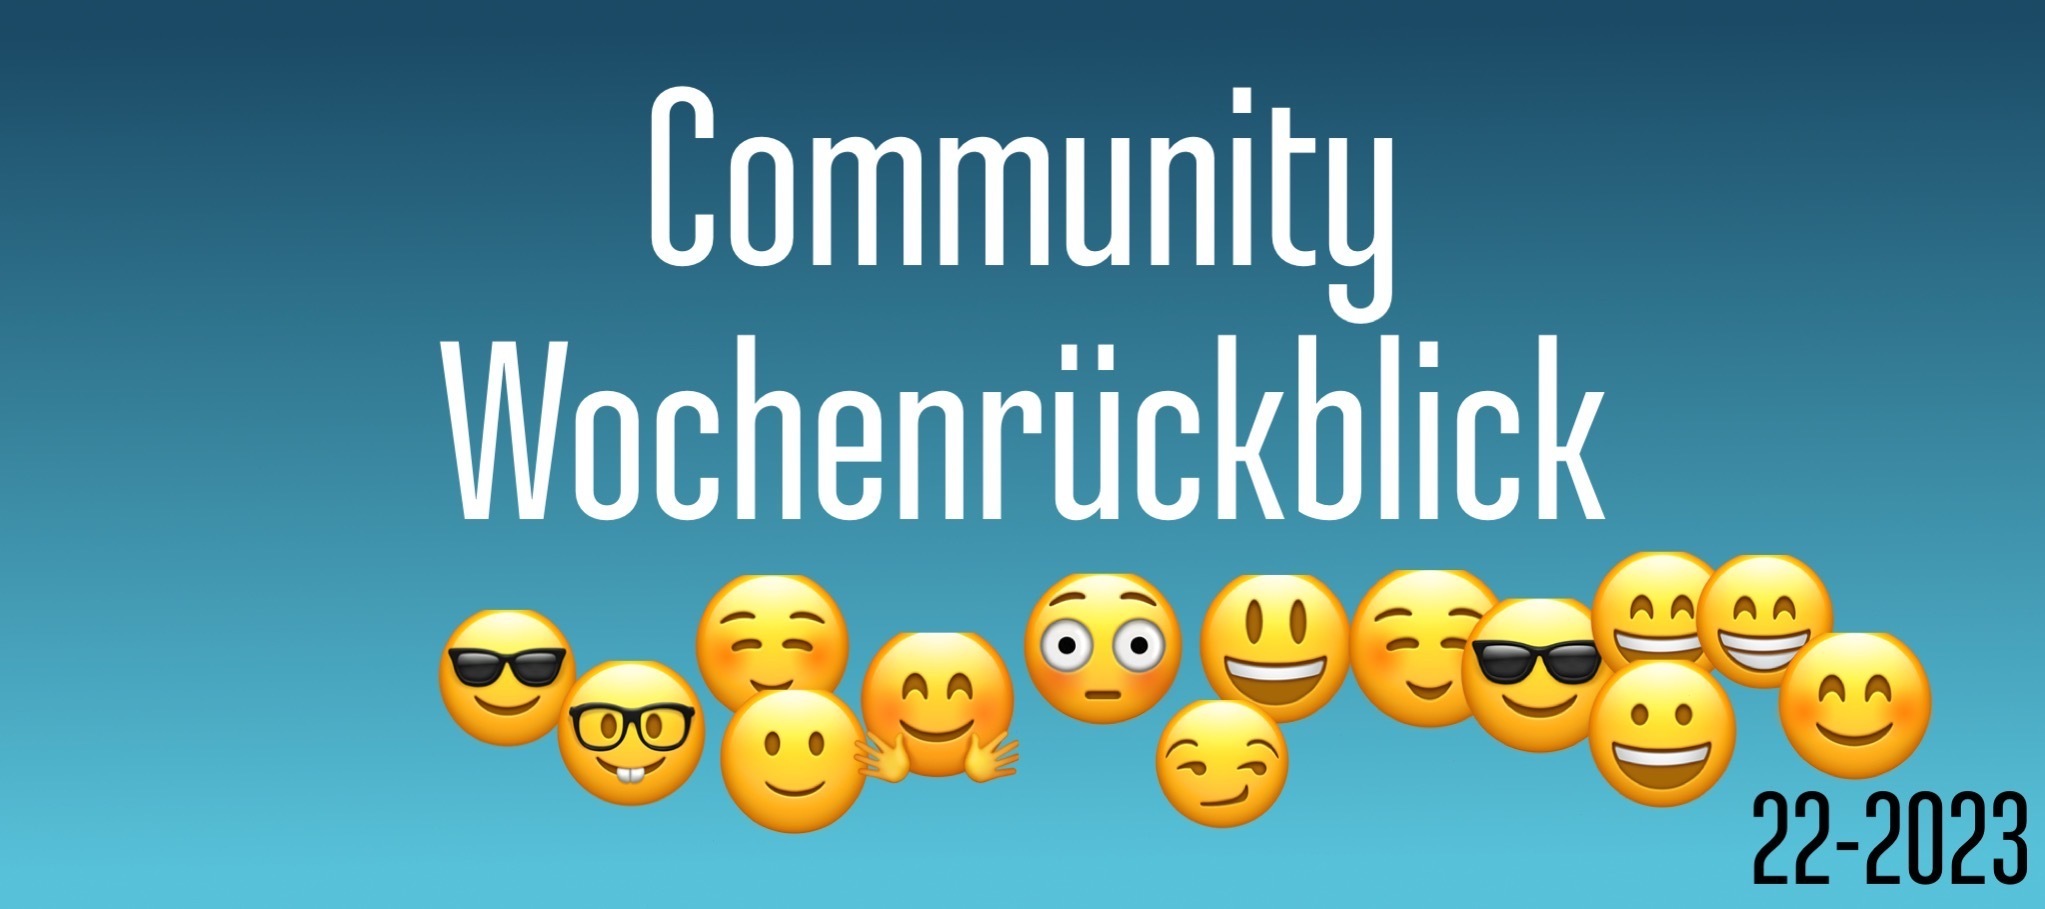 Community Wochenrückblick #22 2023